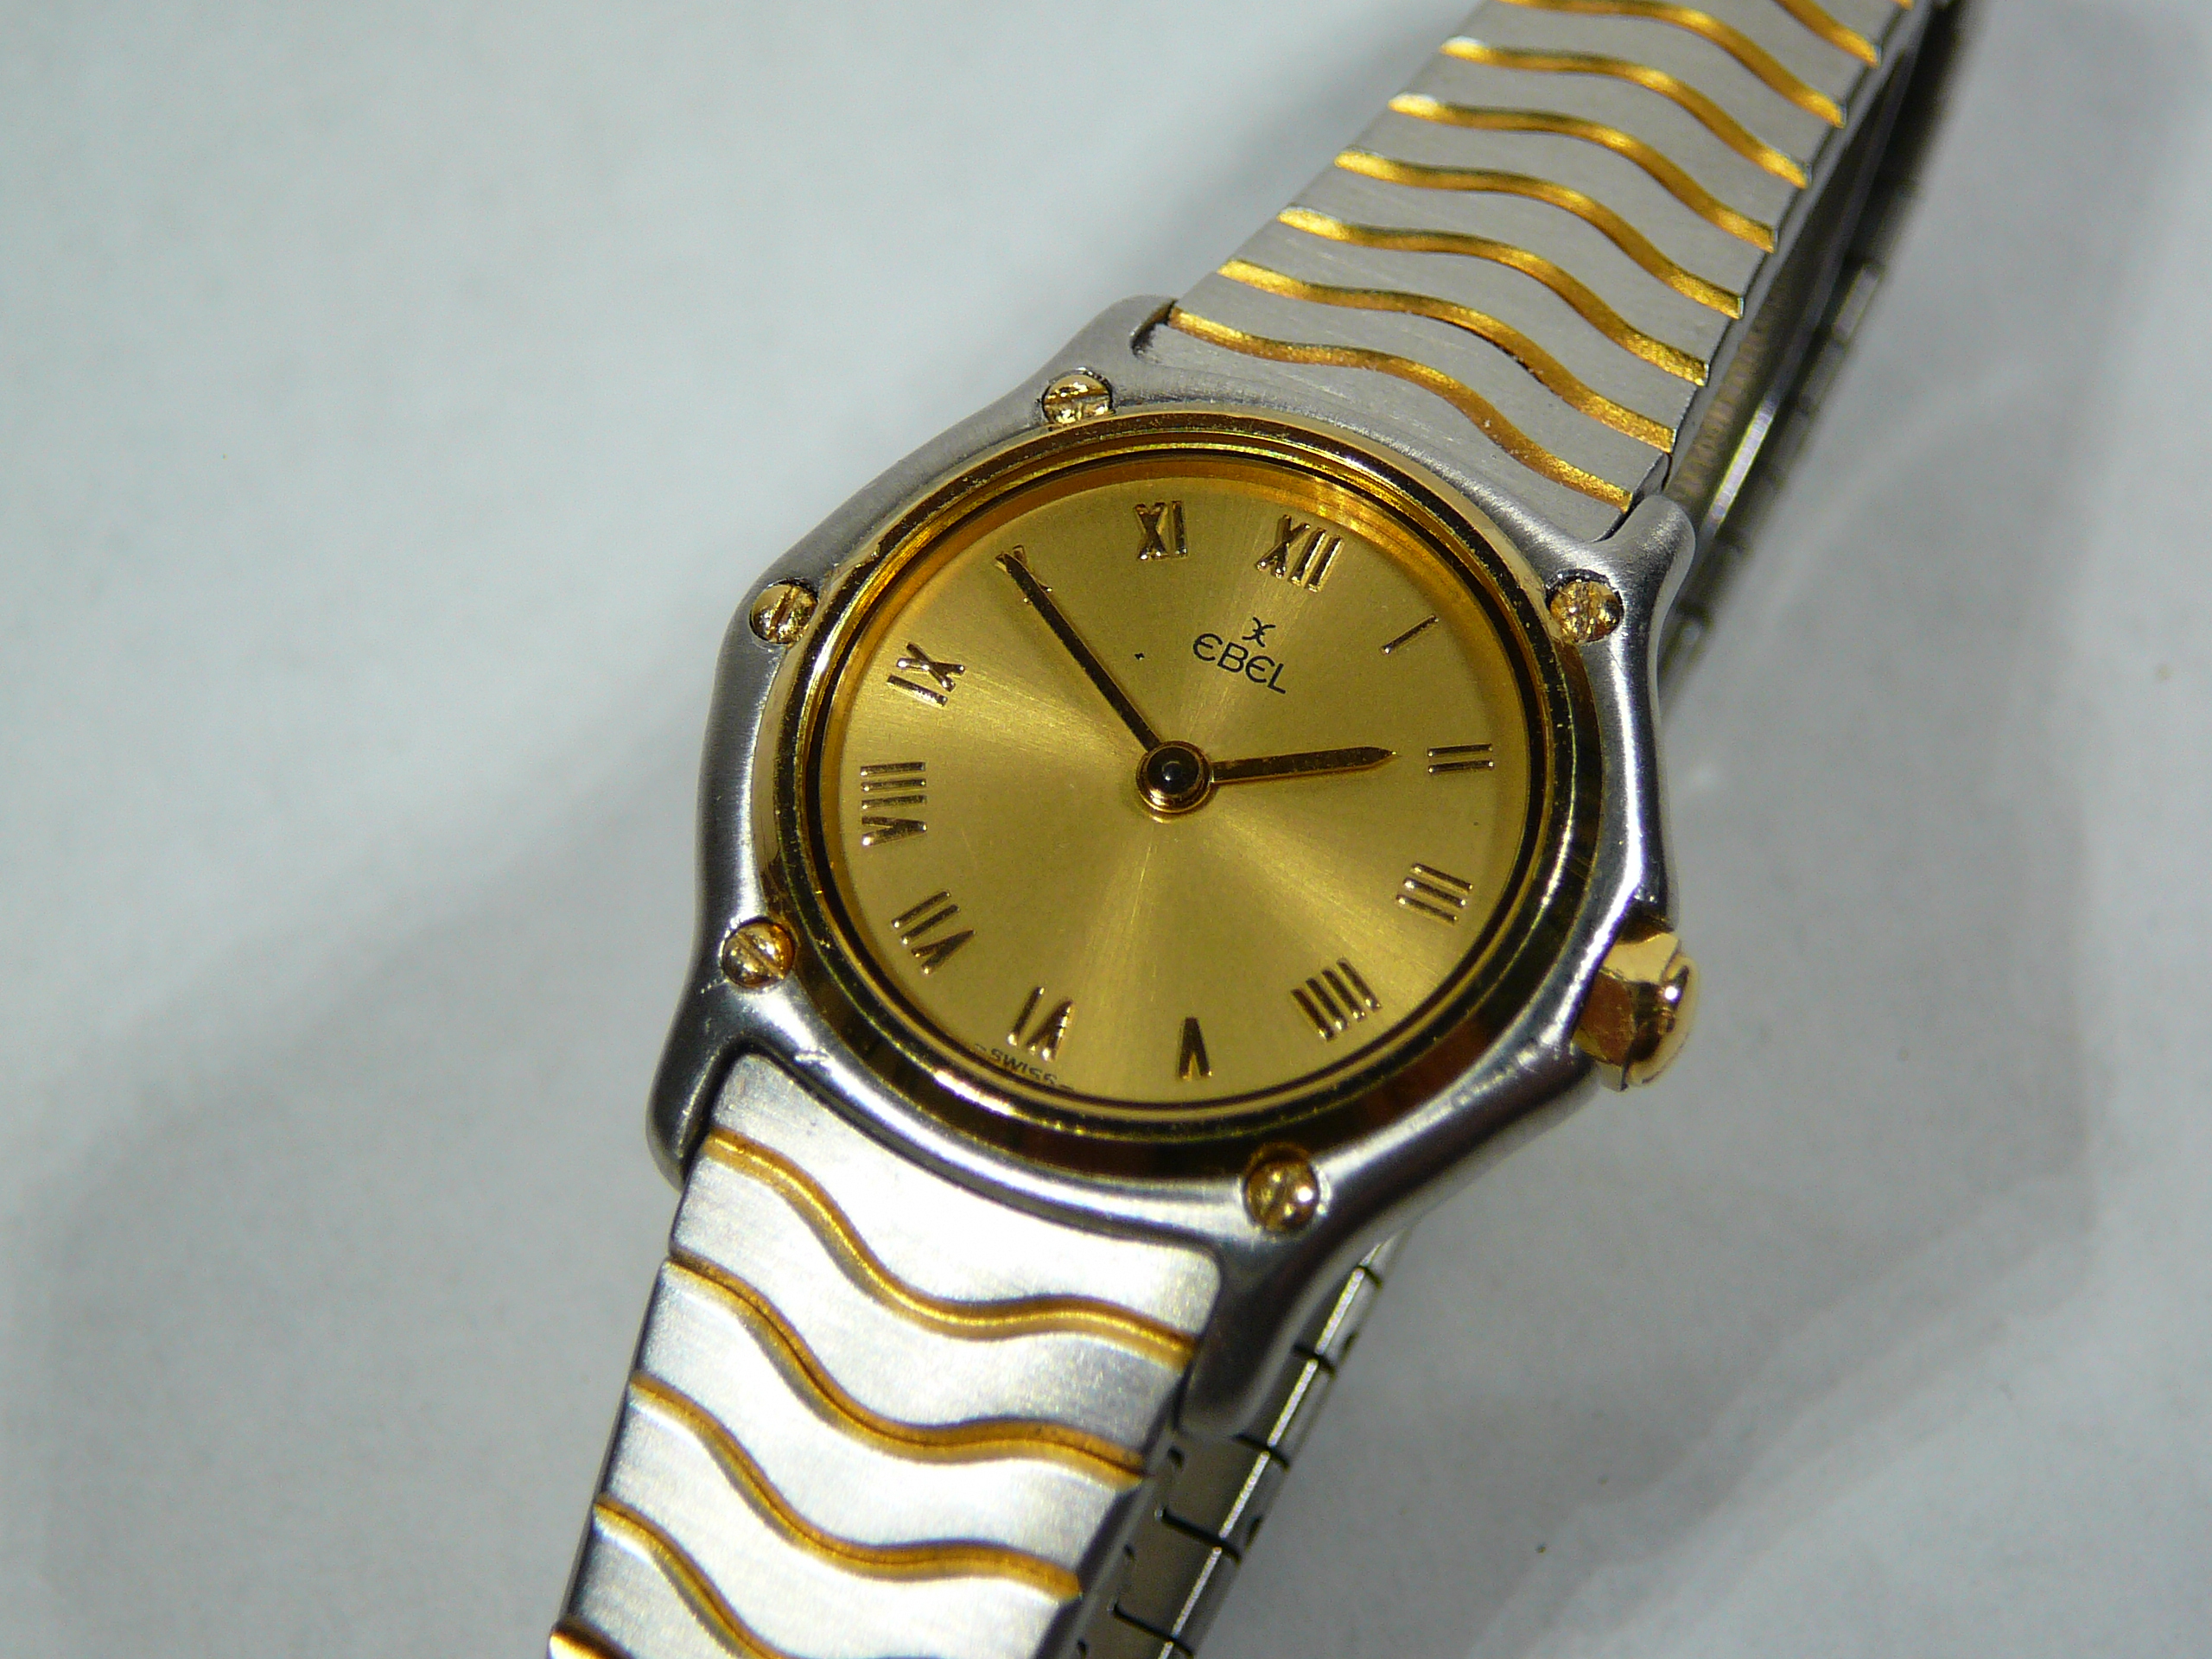 Ladies Ebel Wrist Watch - Image 2 of 3